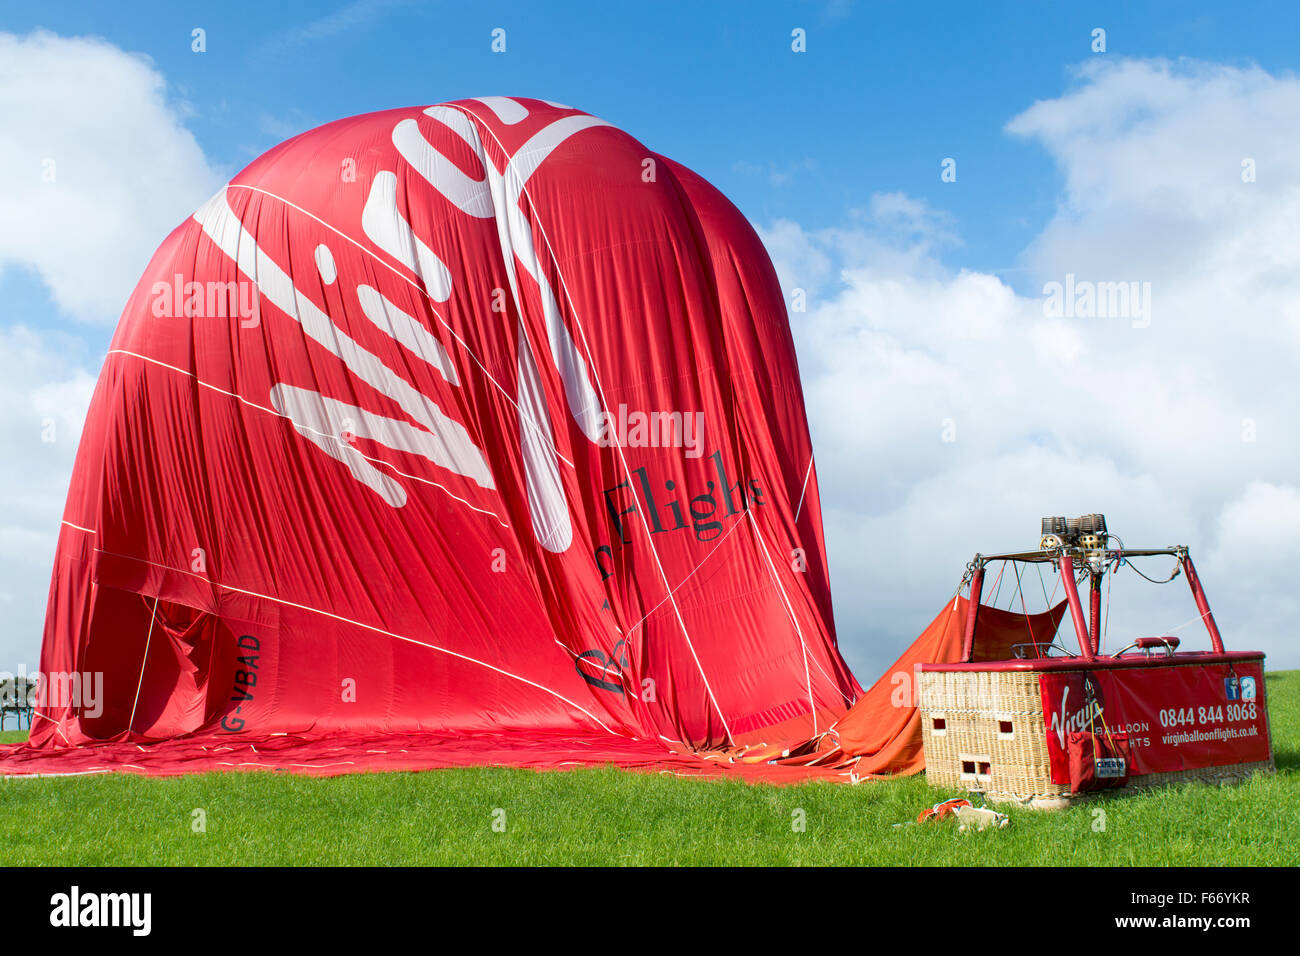 Virgin hot air balloon on ground slowly deflating, Cumbria, UK. Stock Photo